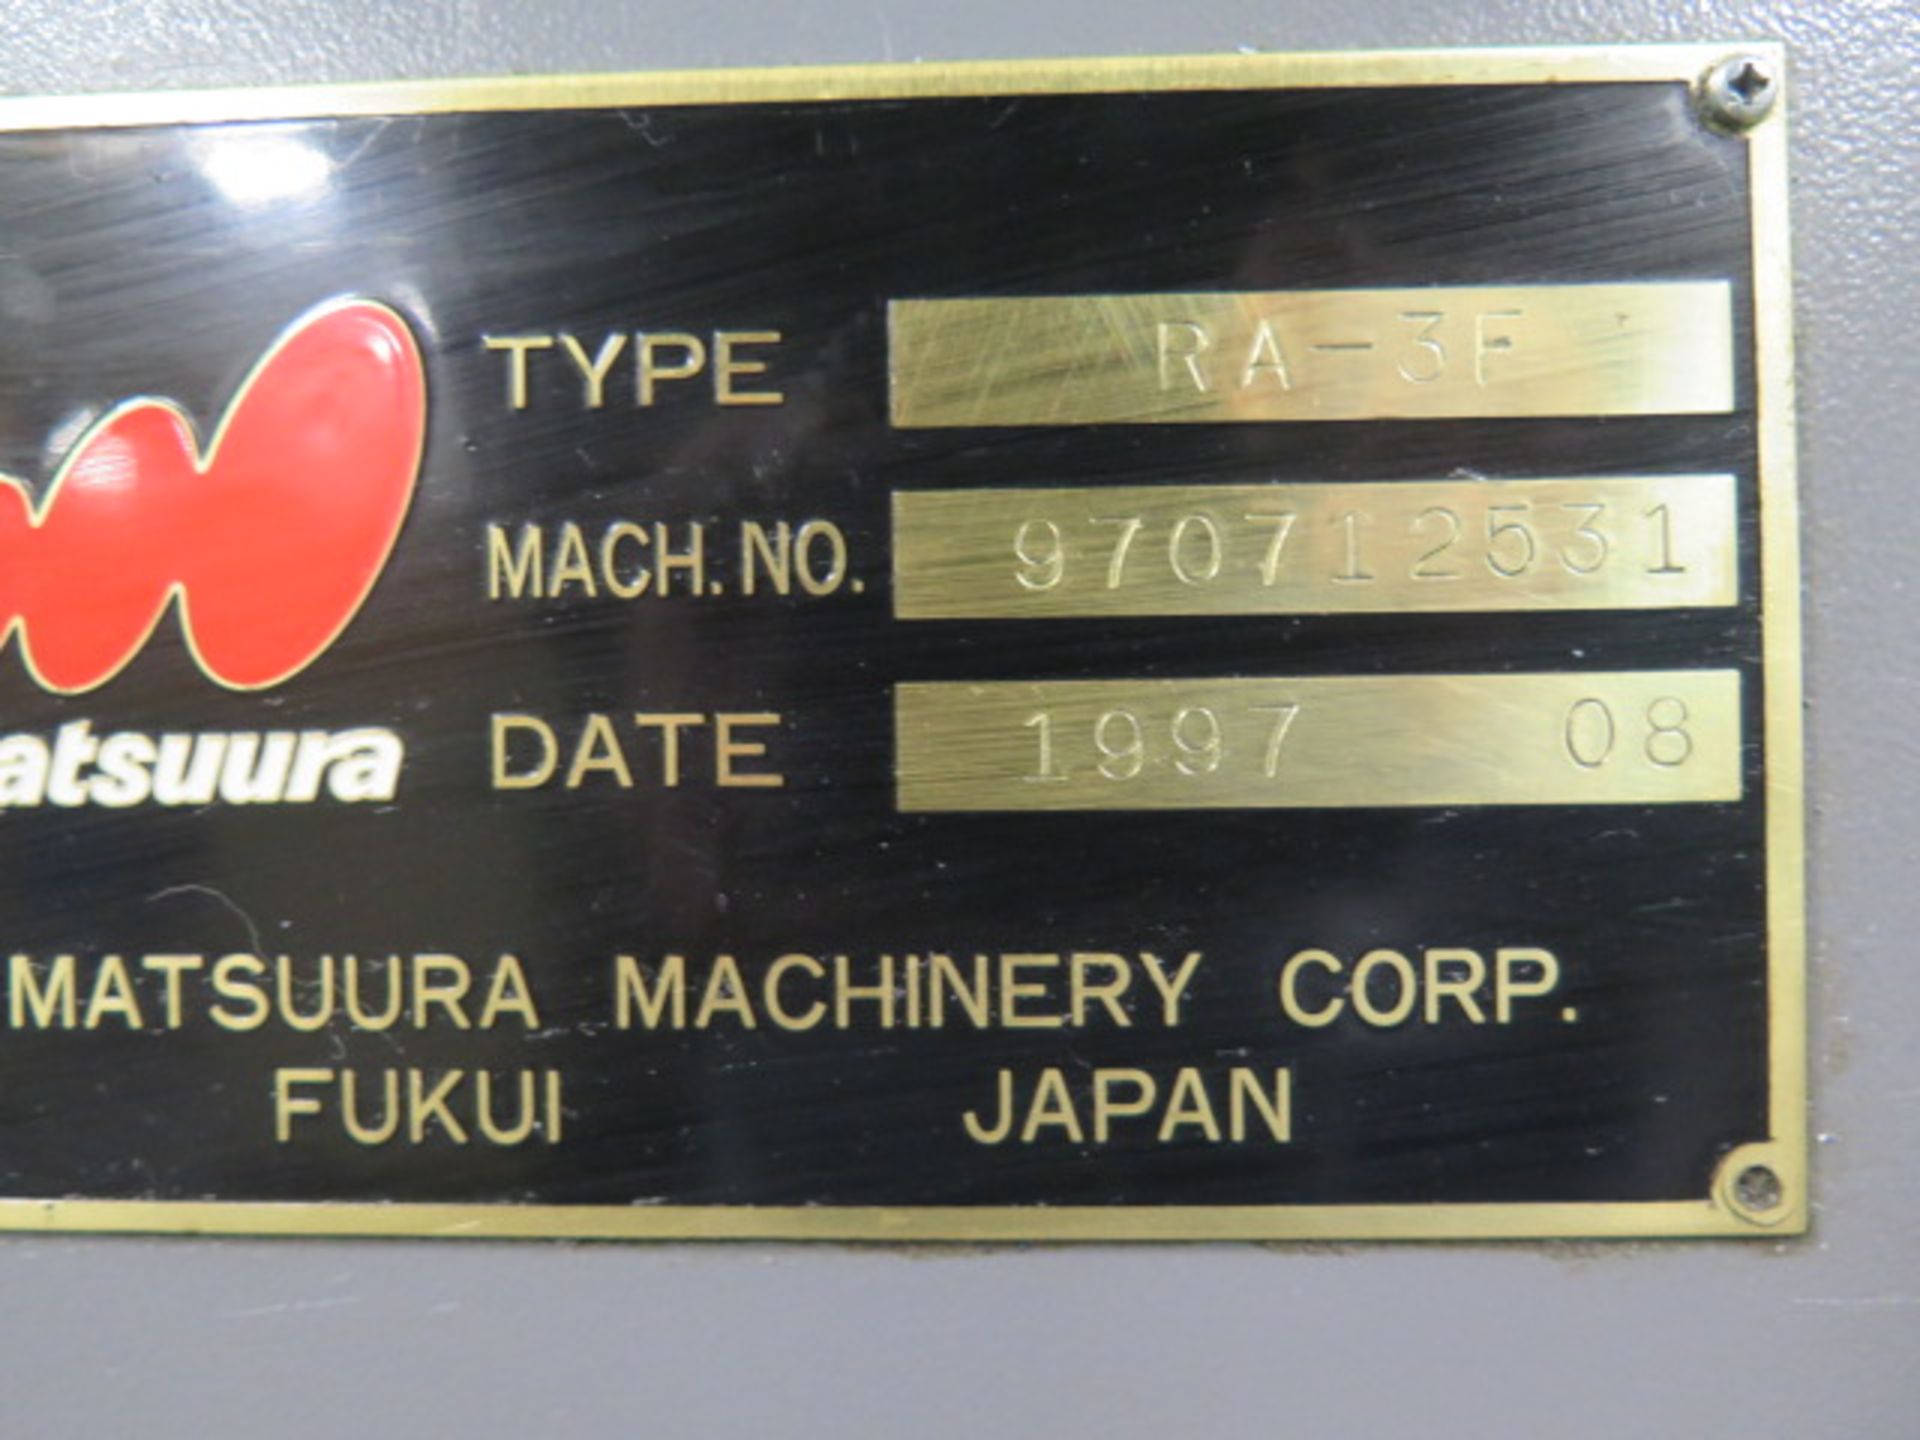 Matsuura RA-3F 2-Pallet CNC Vertical Machining Center s/n 970712531 w/ Yasnac i-80 Controls, Hand W - Image 22 of 23